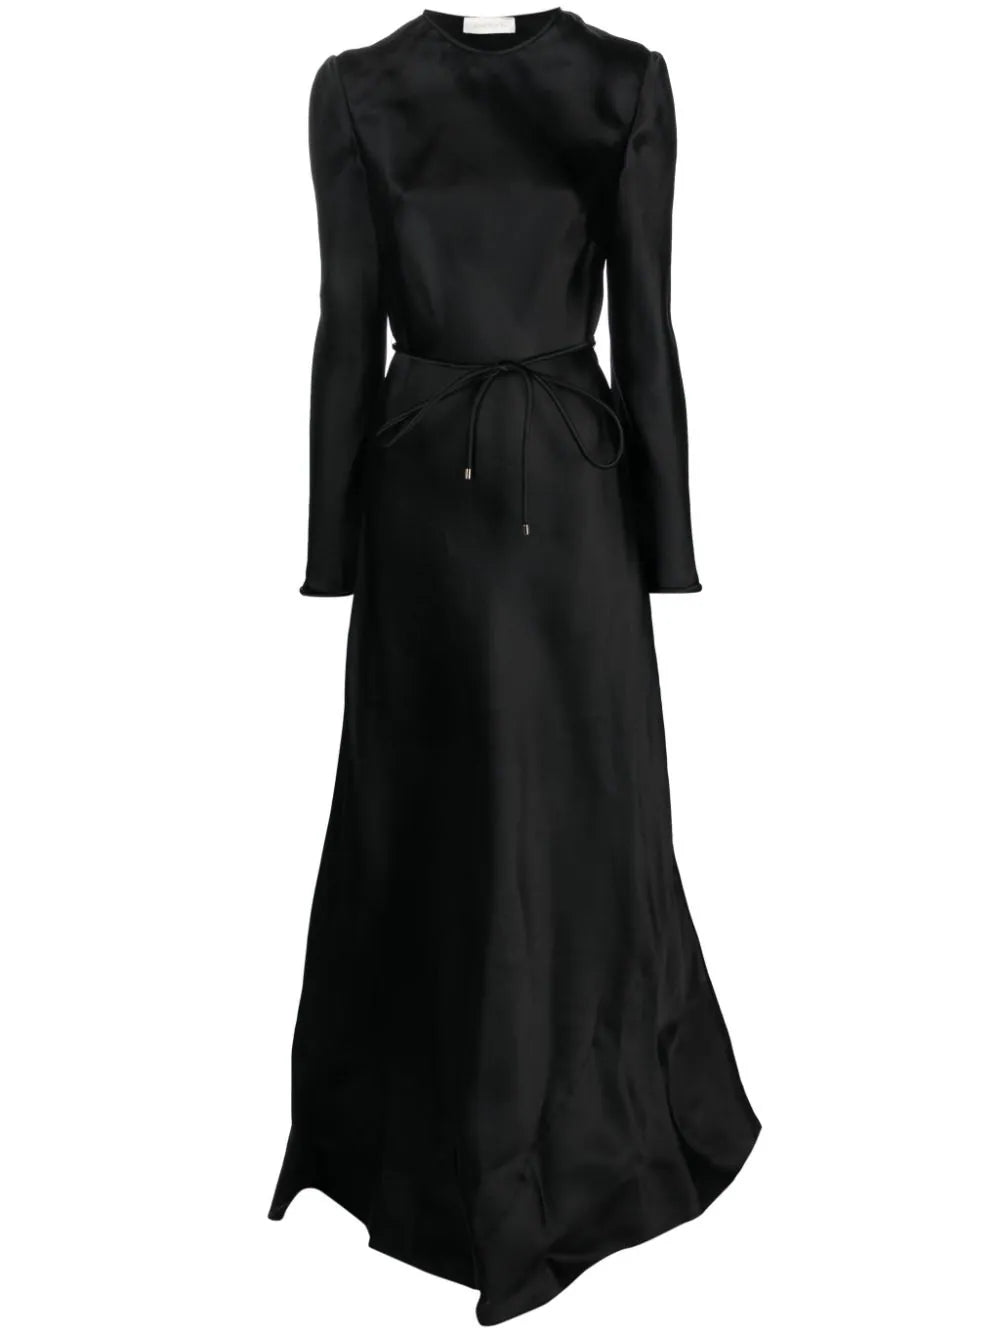 Luminosity Bias Slip Dress, black